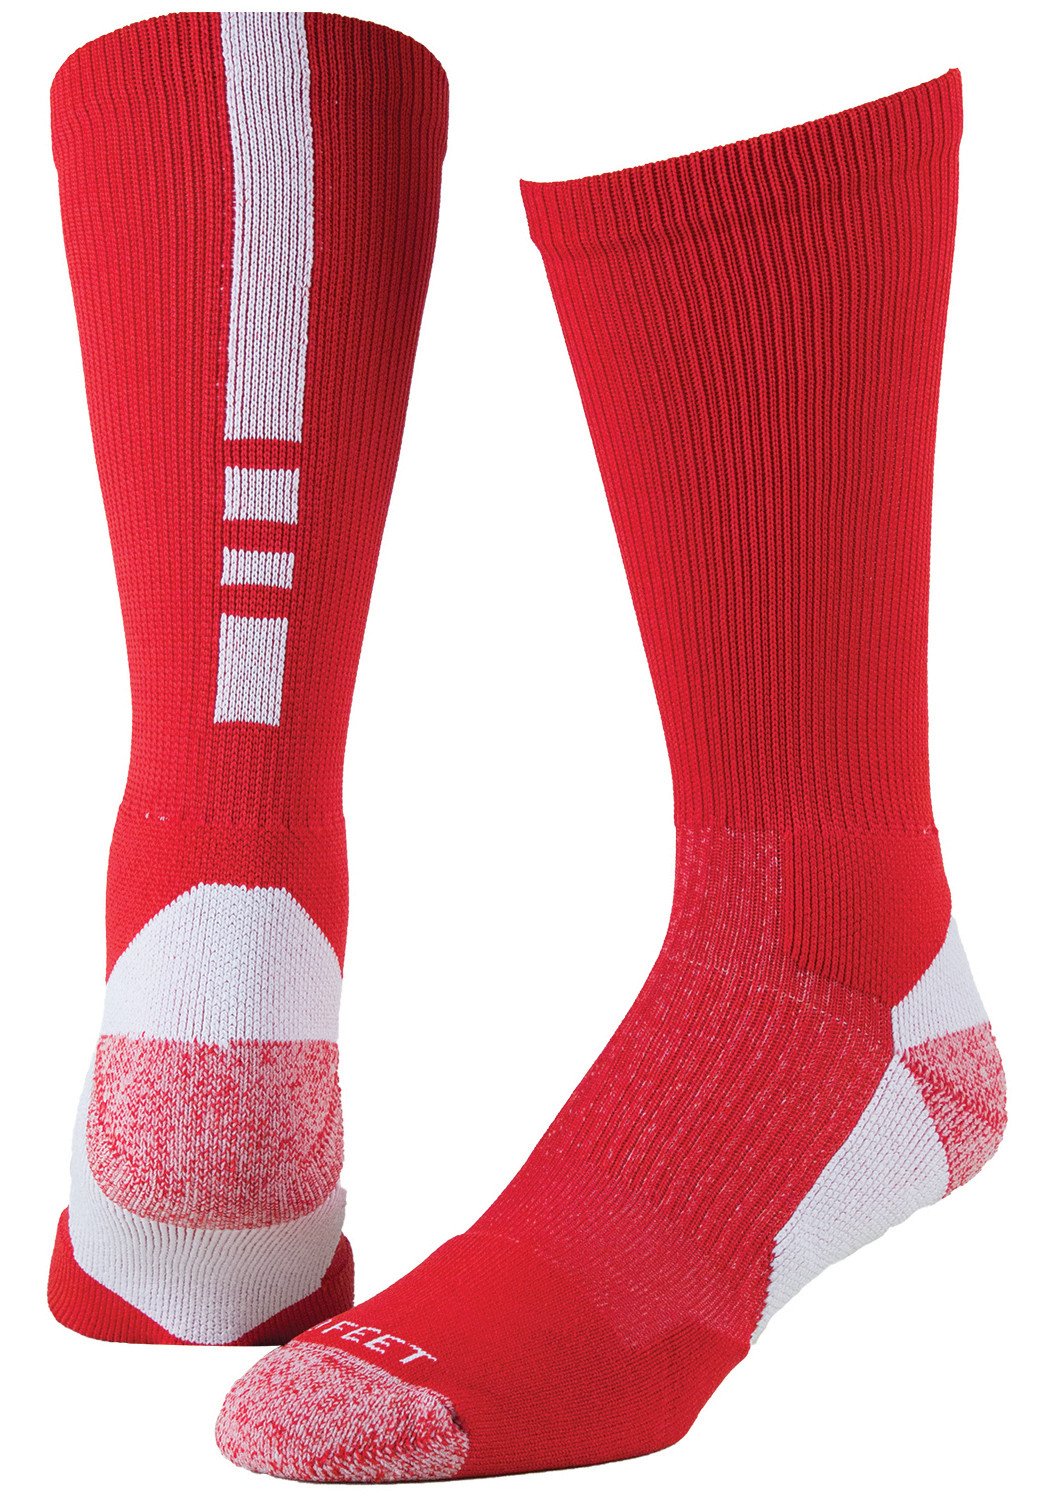 Pro Feet 238 Pro Feet Performance Shooter 2.0 Socks - Red White Size MED 9 - 11 - AtlanticCoastSports